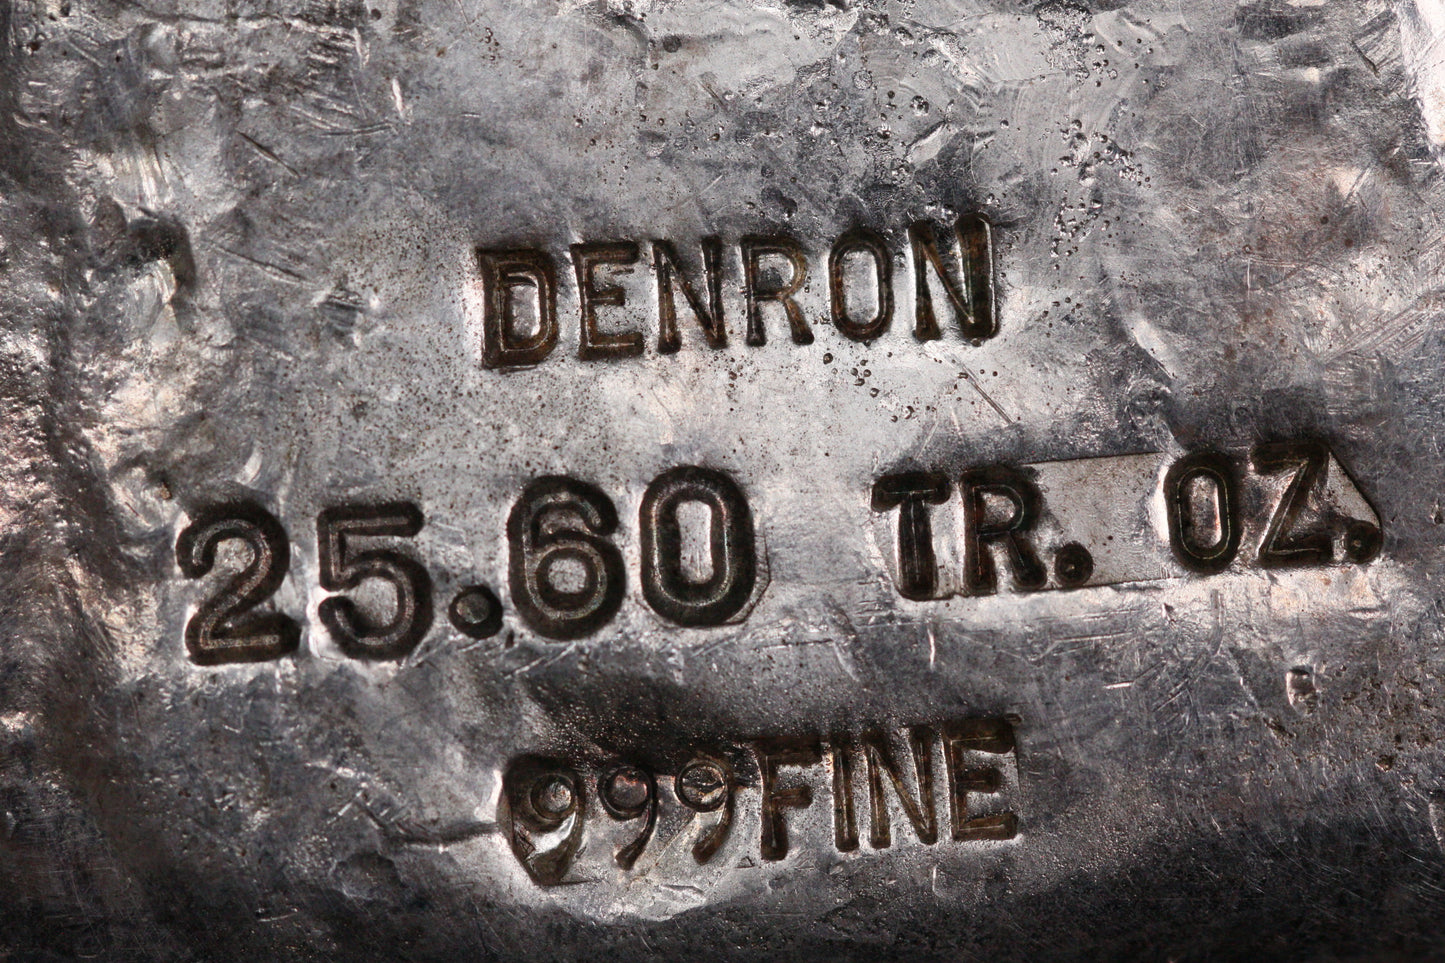 Denron "Cripple Creek" 25.60 Ounce Silver Bar